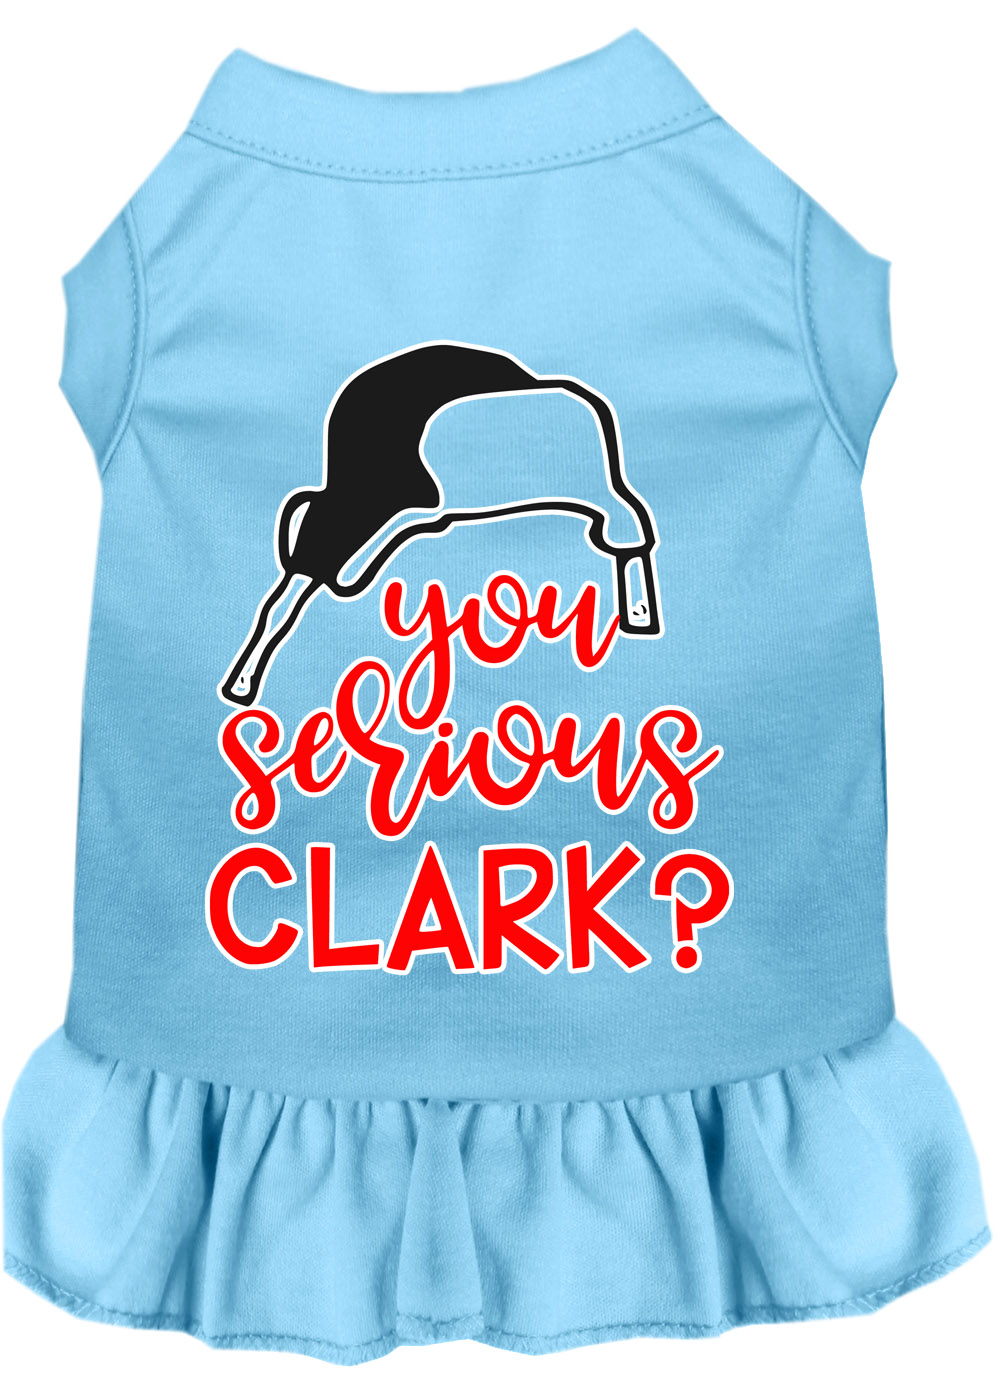 You Serious Clark? Screen Print Dog Dress Baby Blue XL